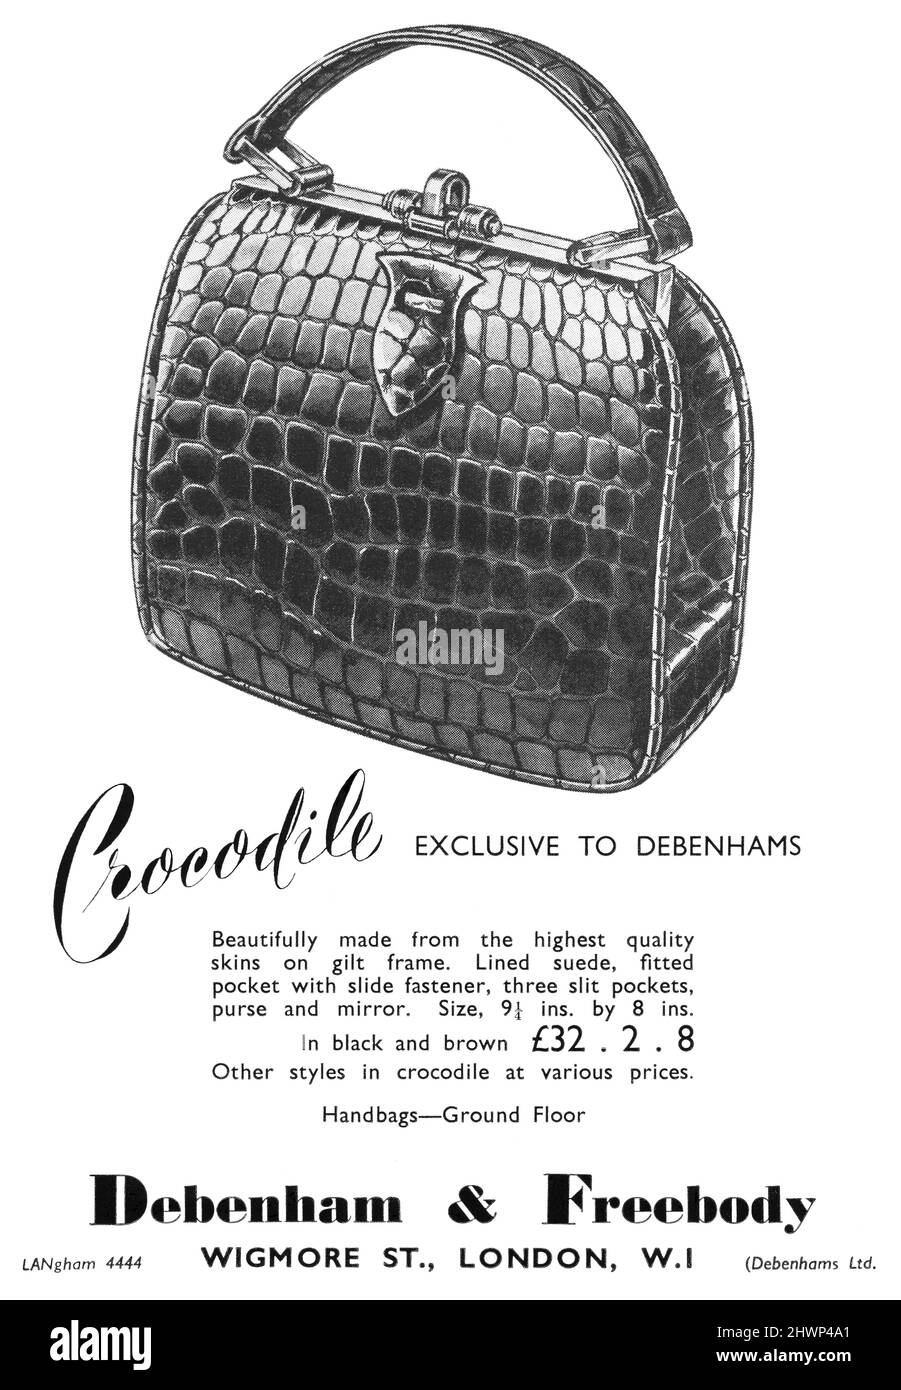 1948 British advertisement for a crocodile handbag available at the Debenham & Freebody department store. Stock Photo